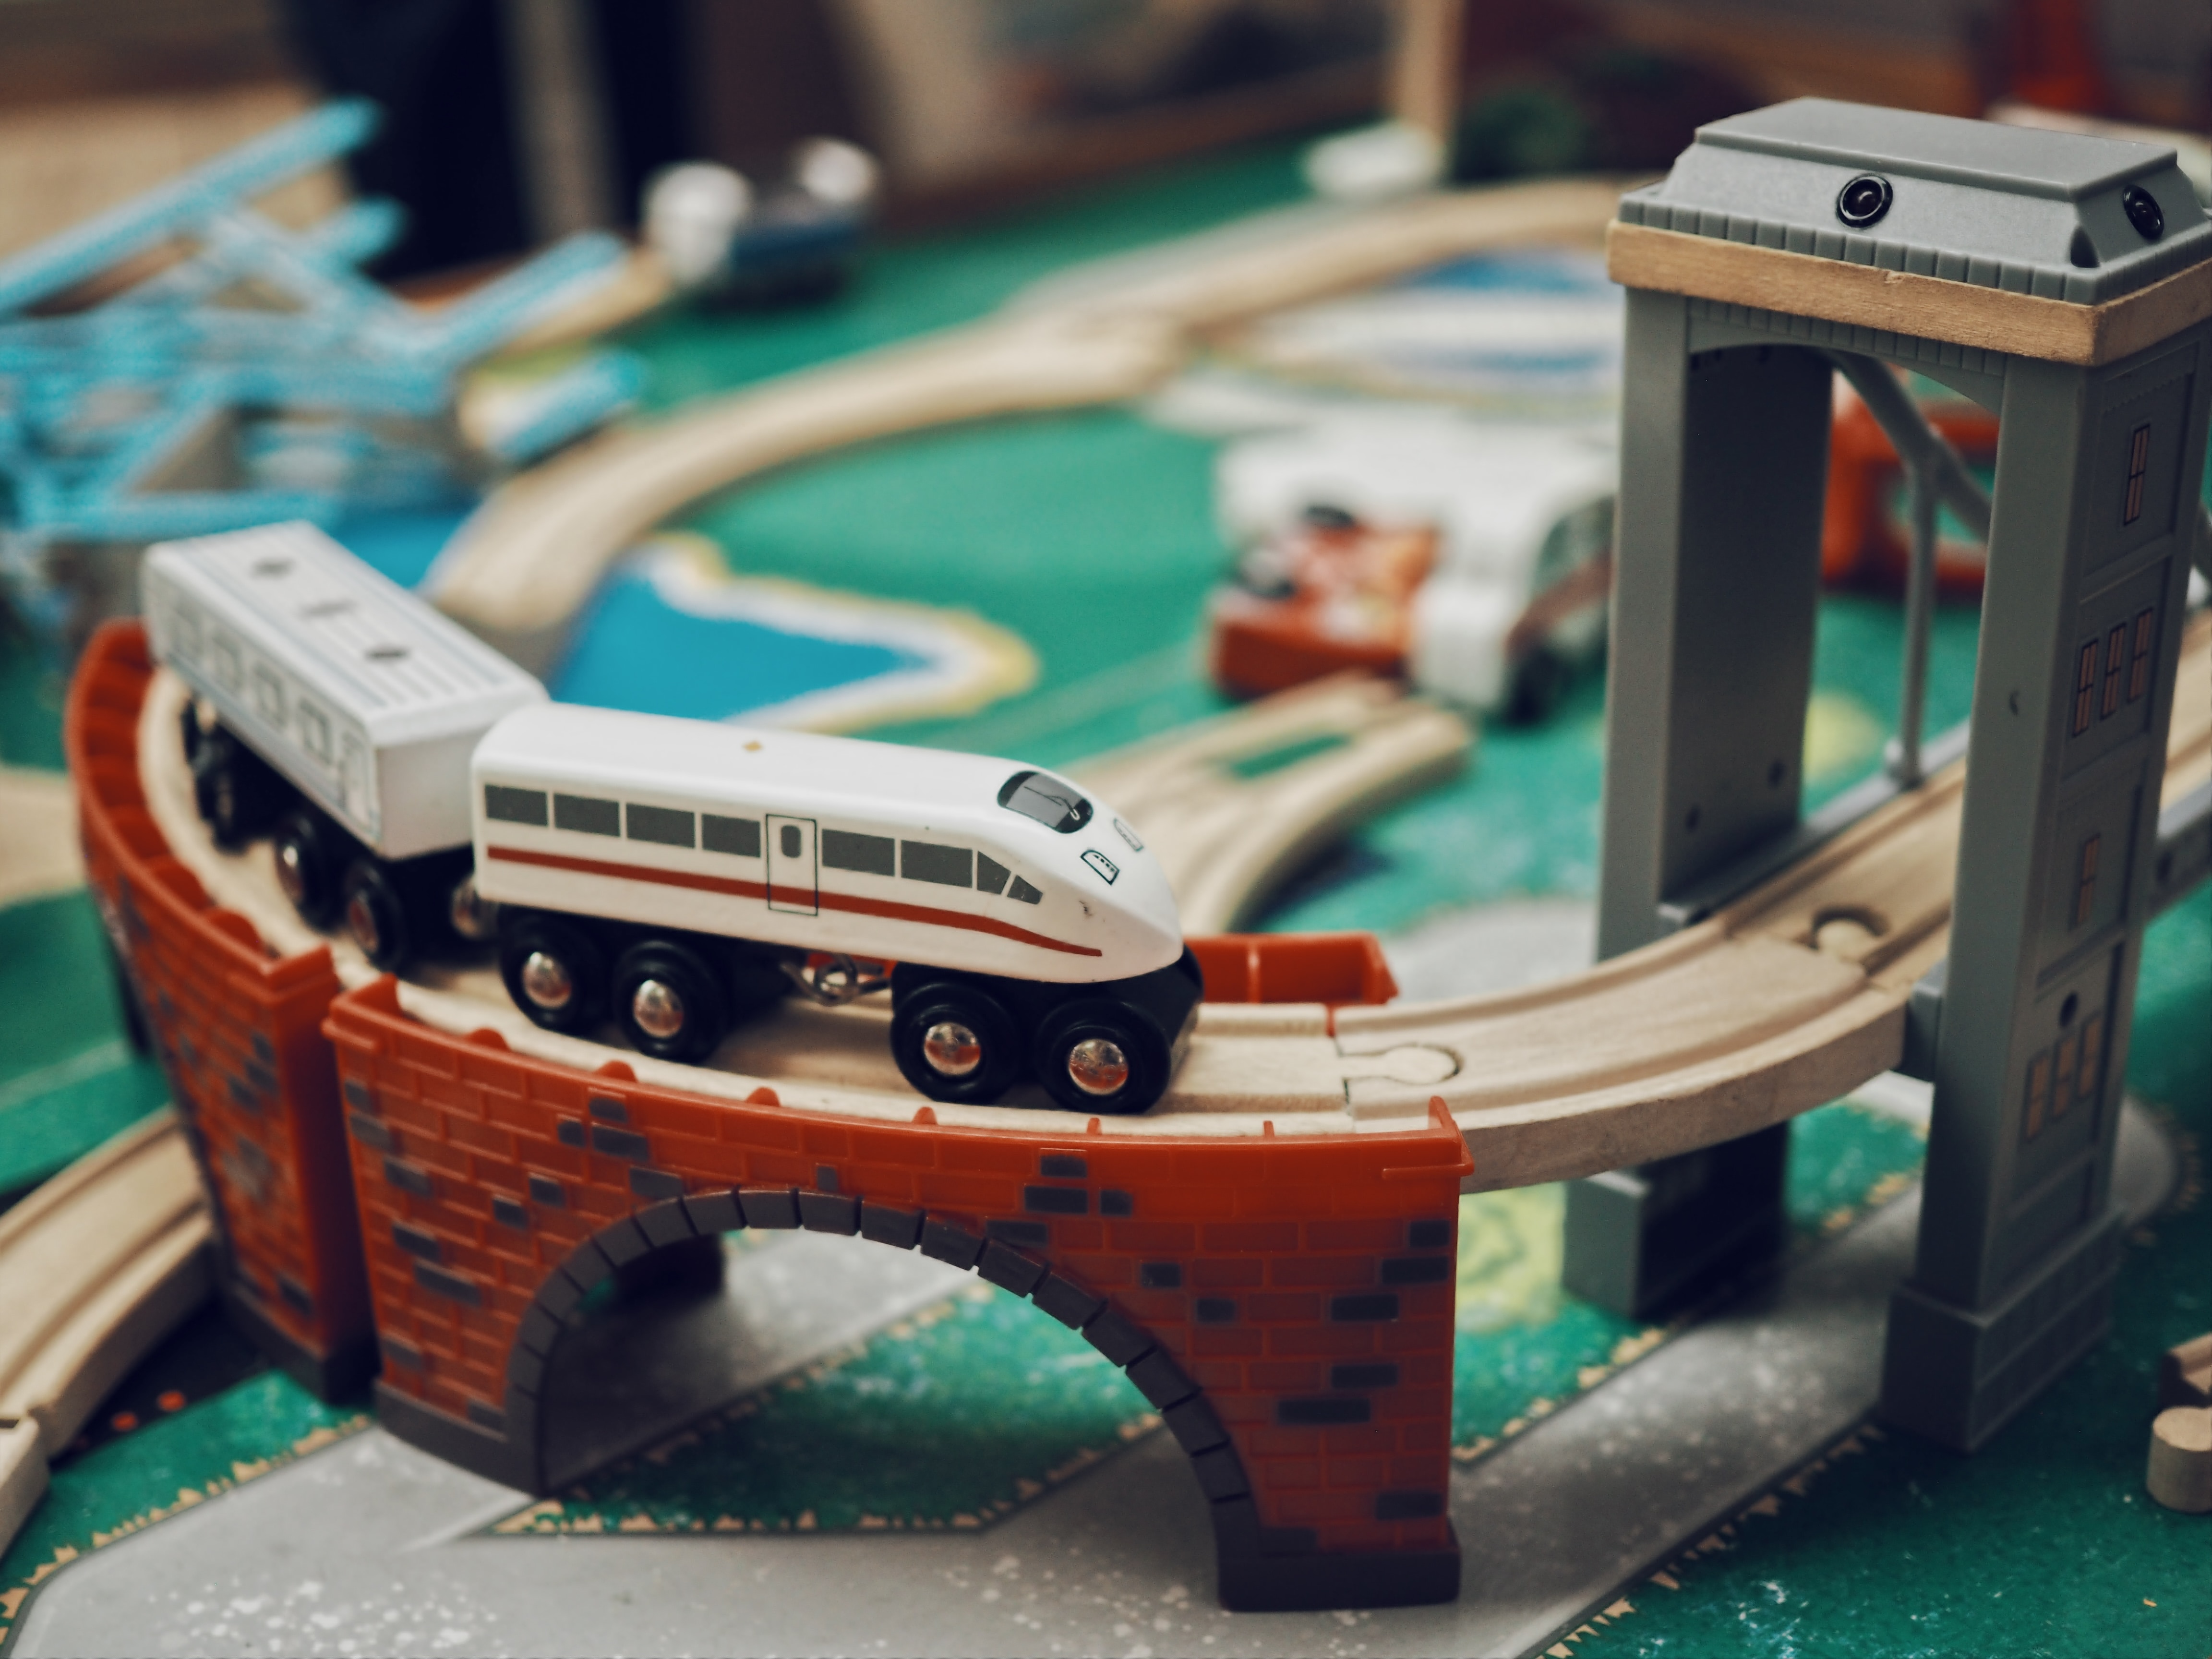 A wooden toy train on a toy bridge